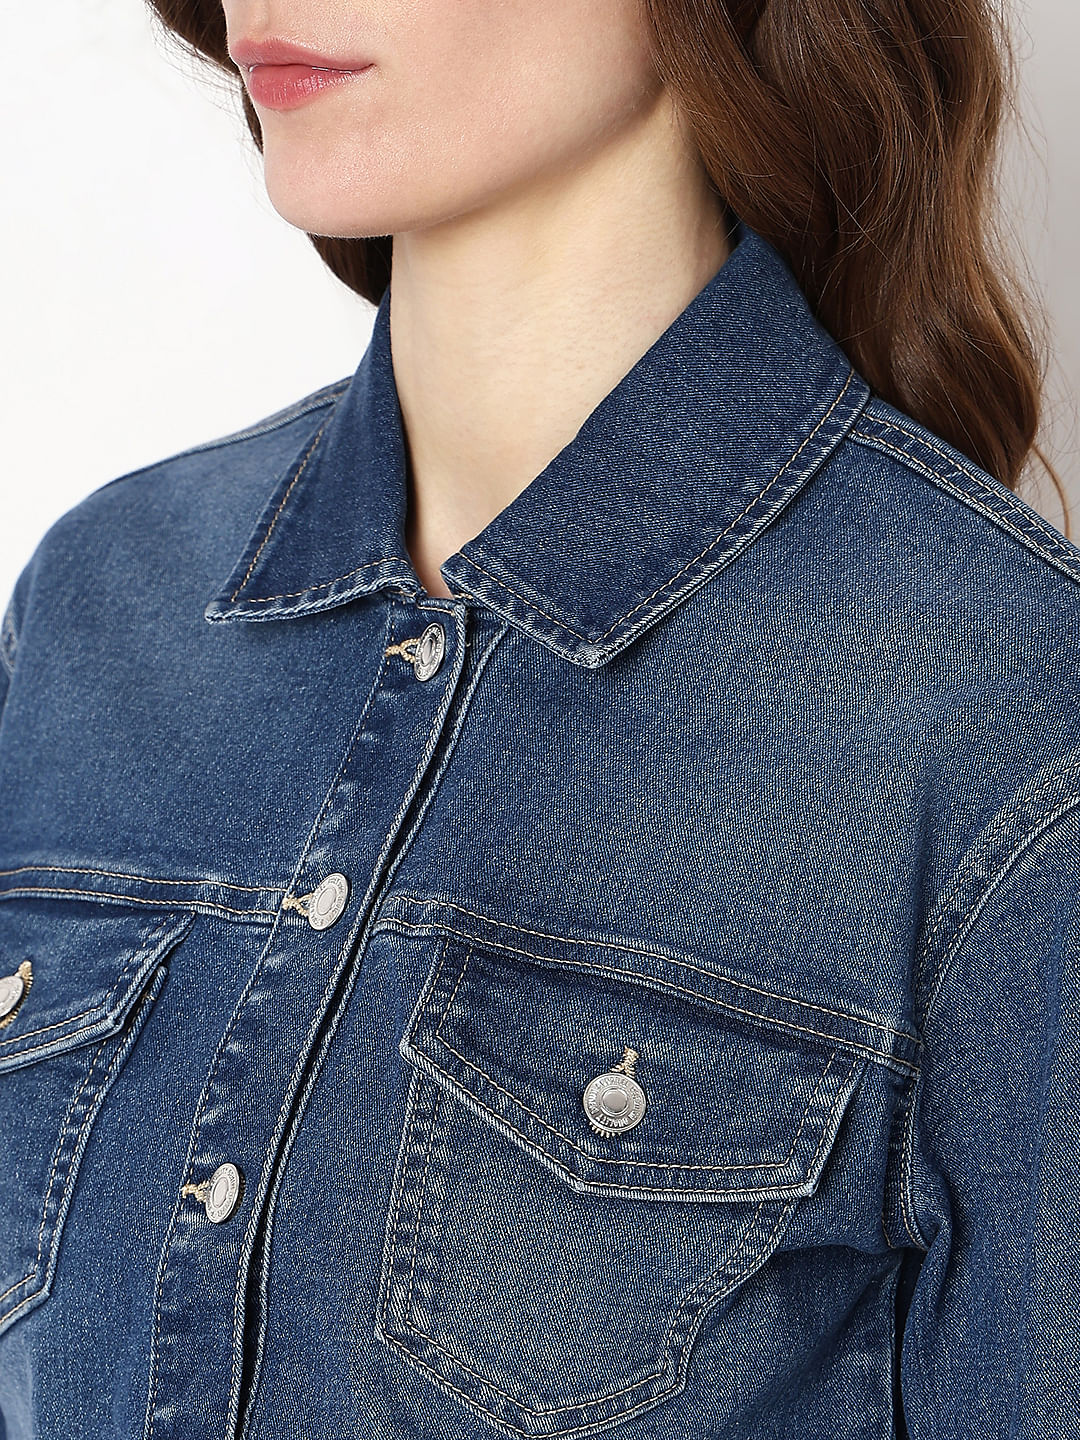 WGOUP Fashion Women's Solid Button Wear Out Long Puff Sleeve Denim Jacket  Coat,Dark Blue - Walmart.com